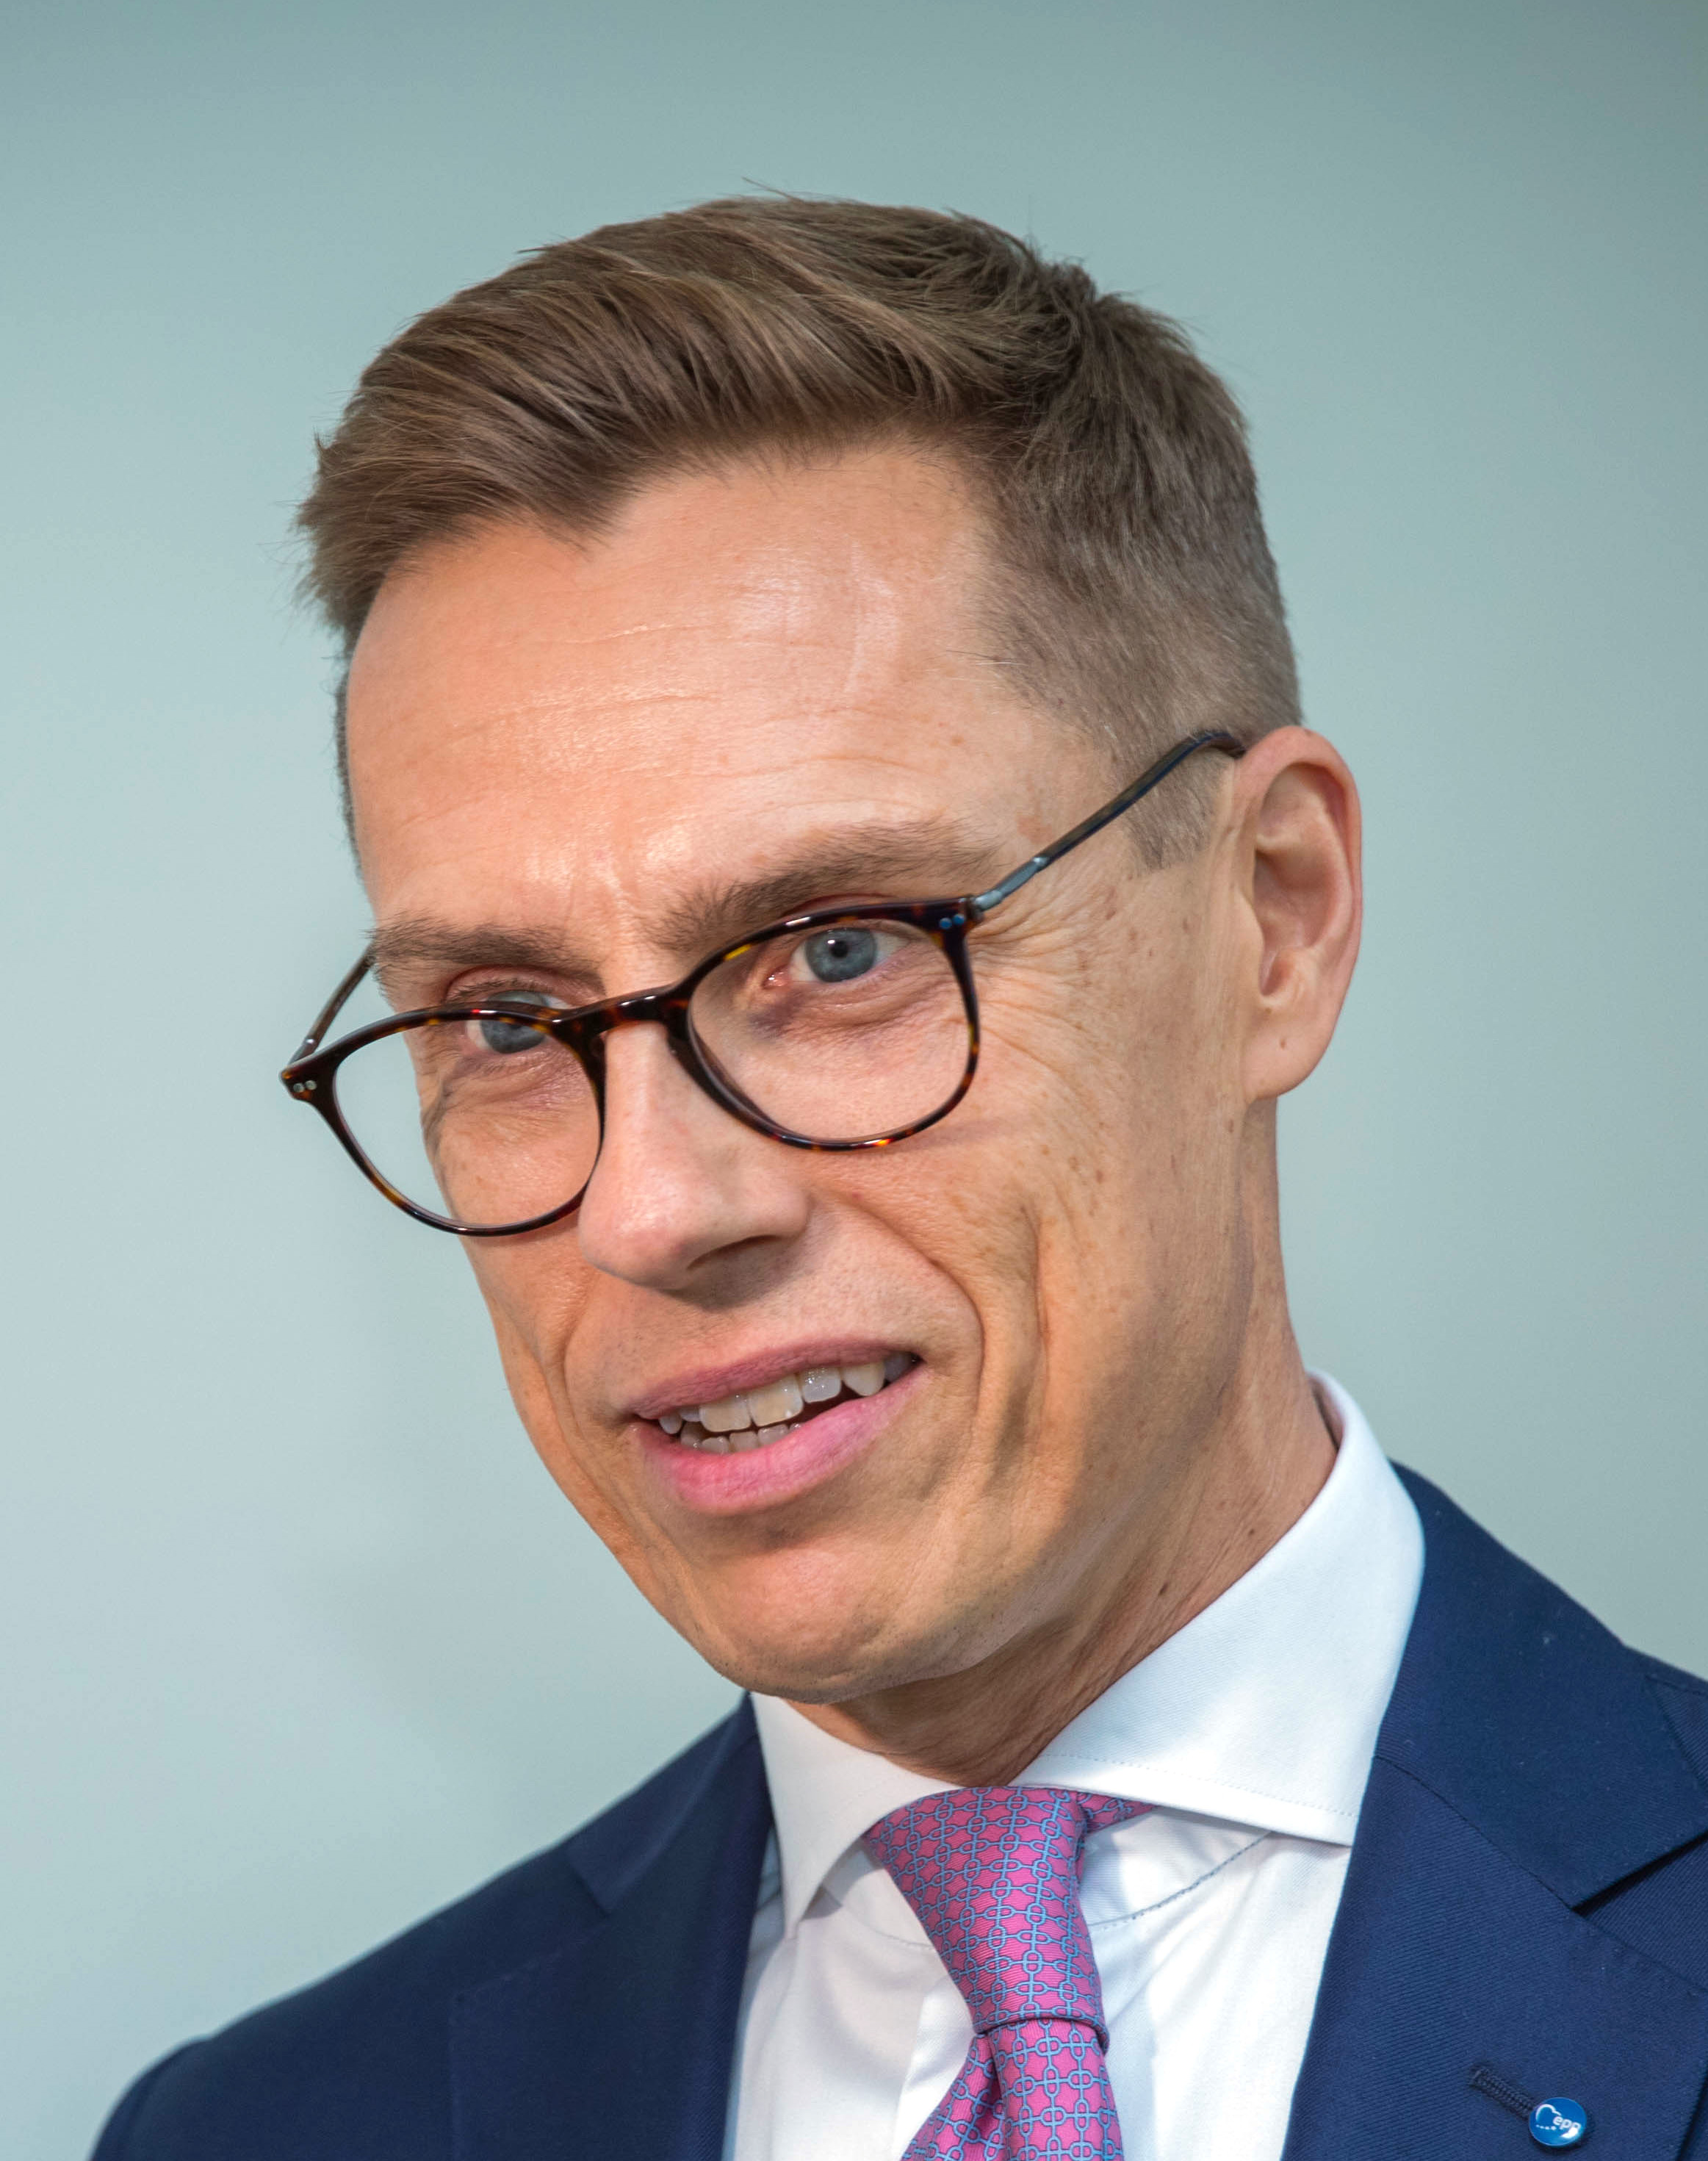 Former Finnish PM Alexander Stubb to run for president